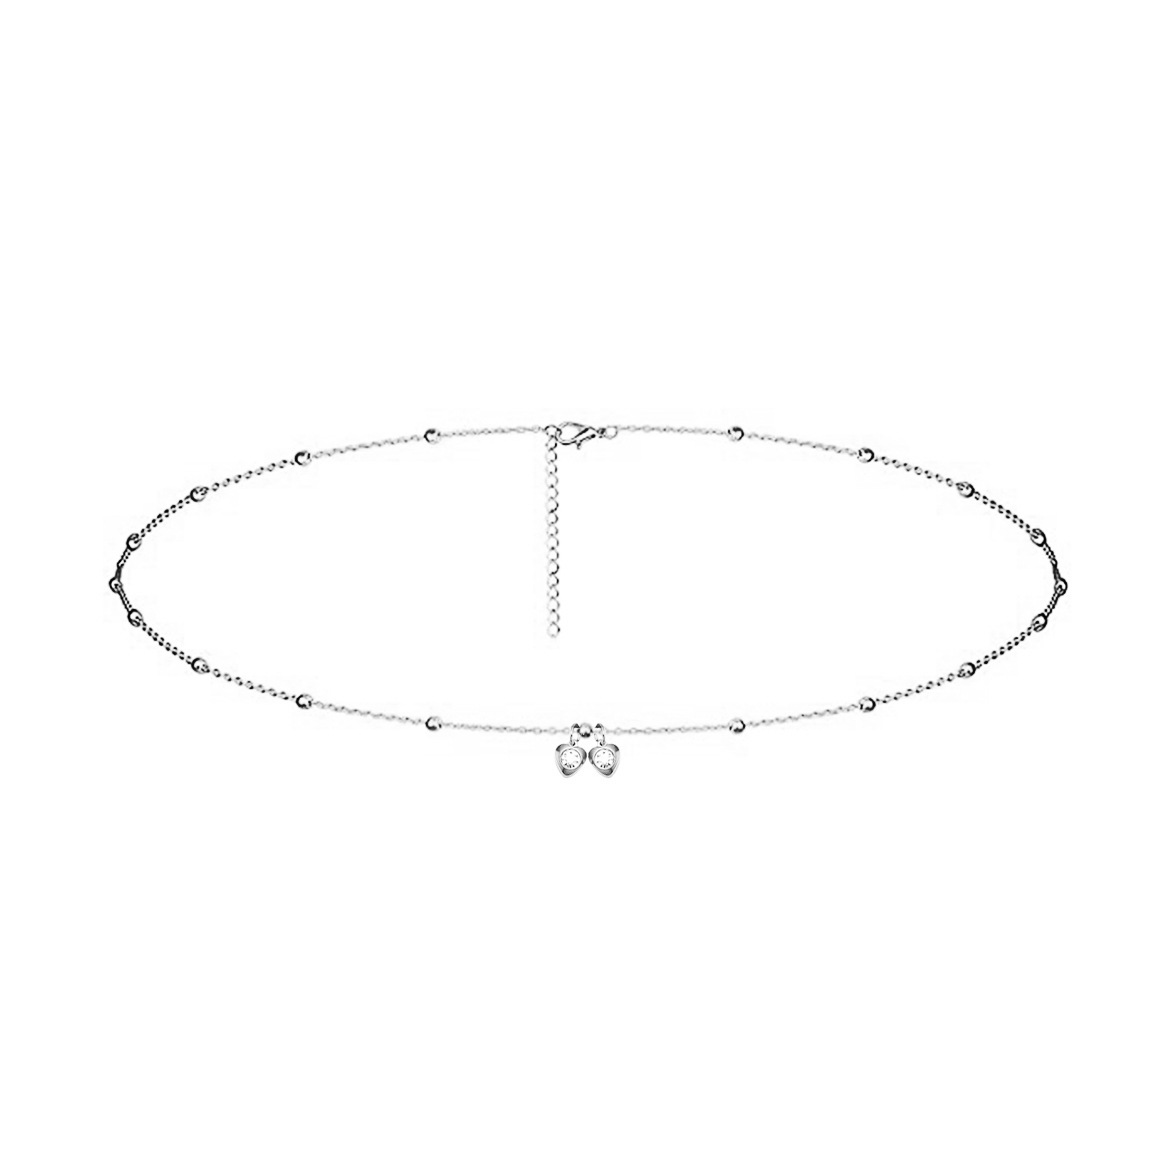 3:ALAD197-01-bead chain silver